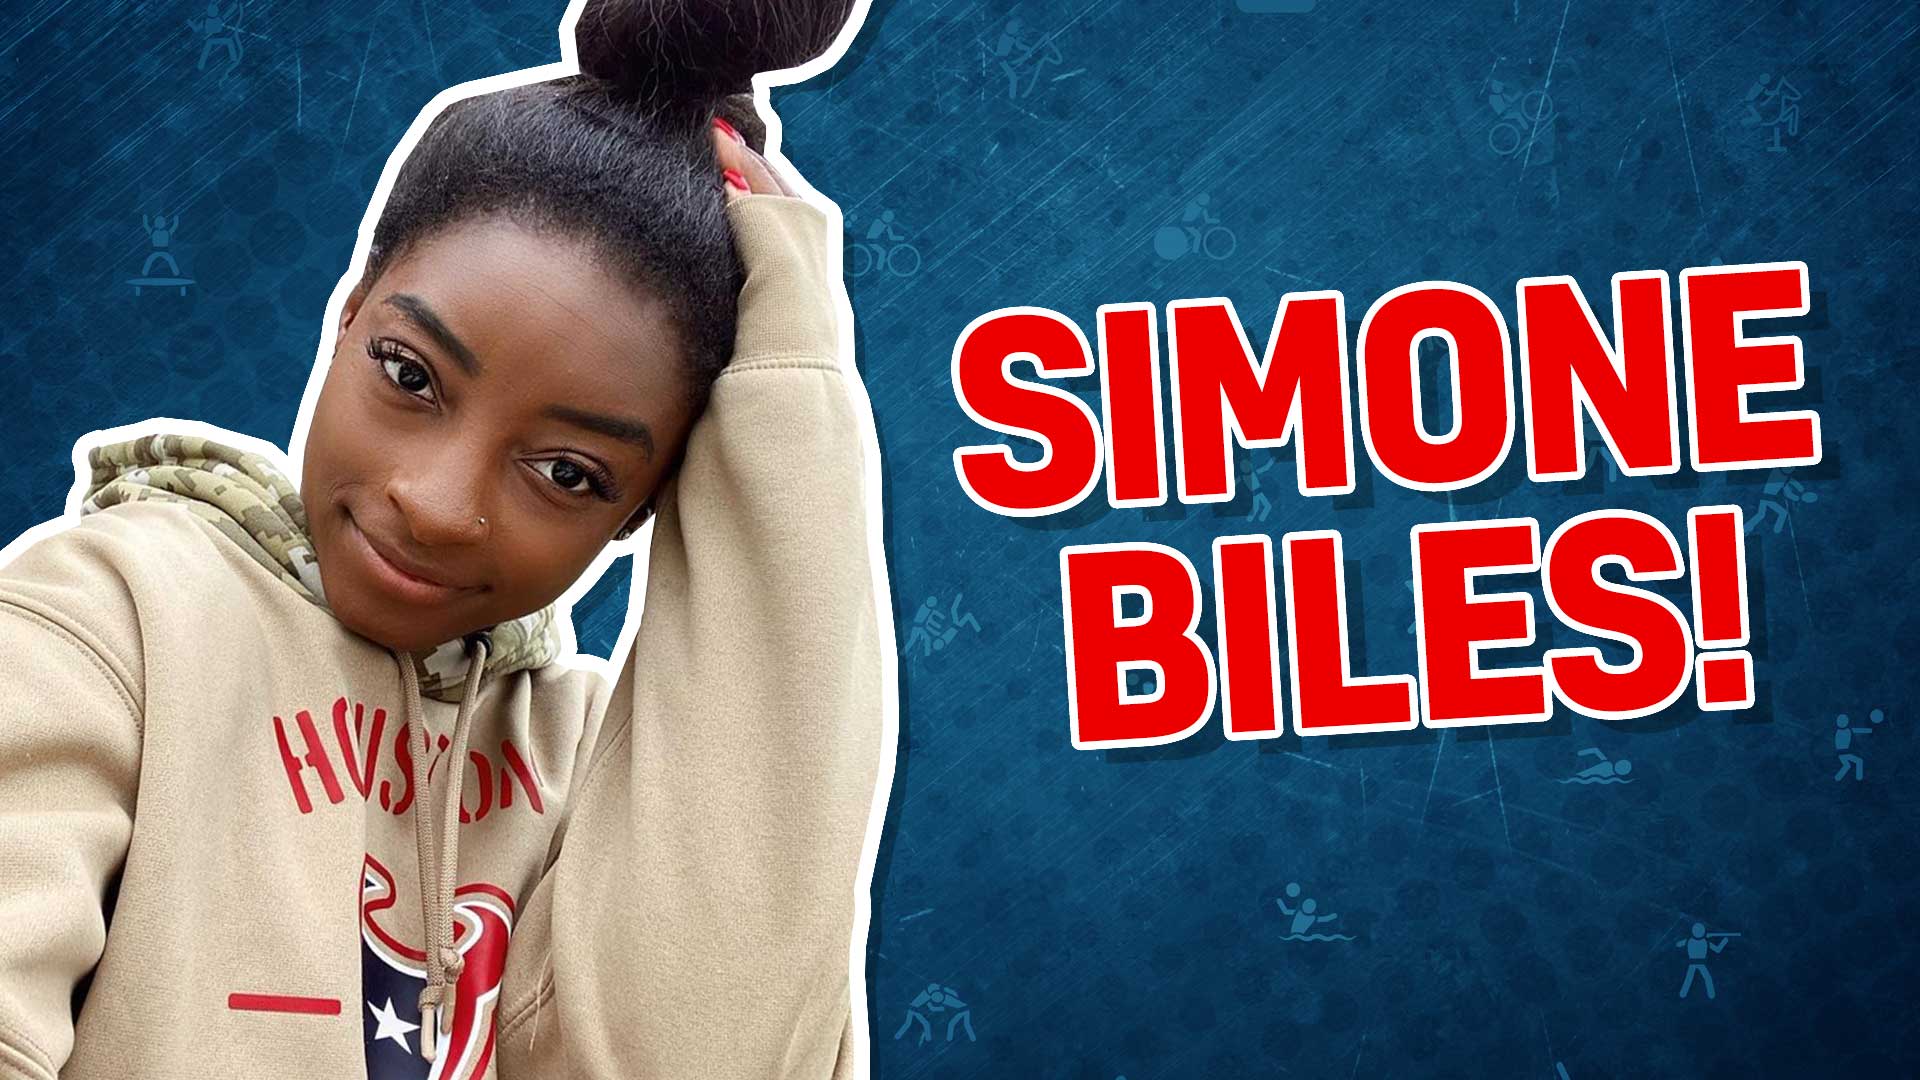 Olympic gymnast Simone Biles